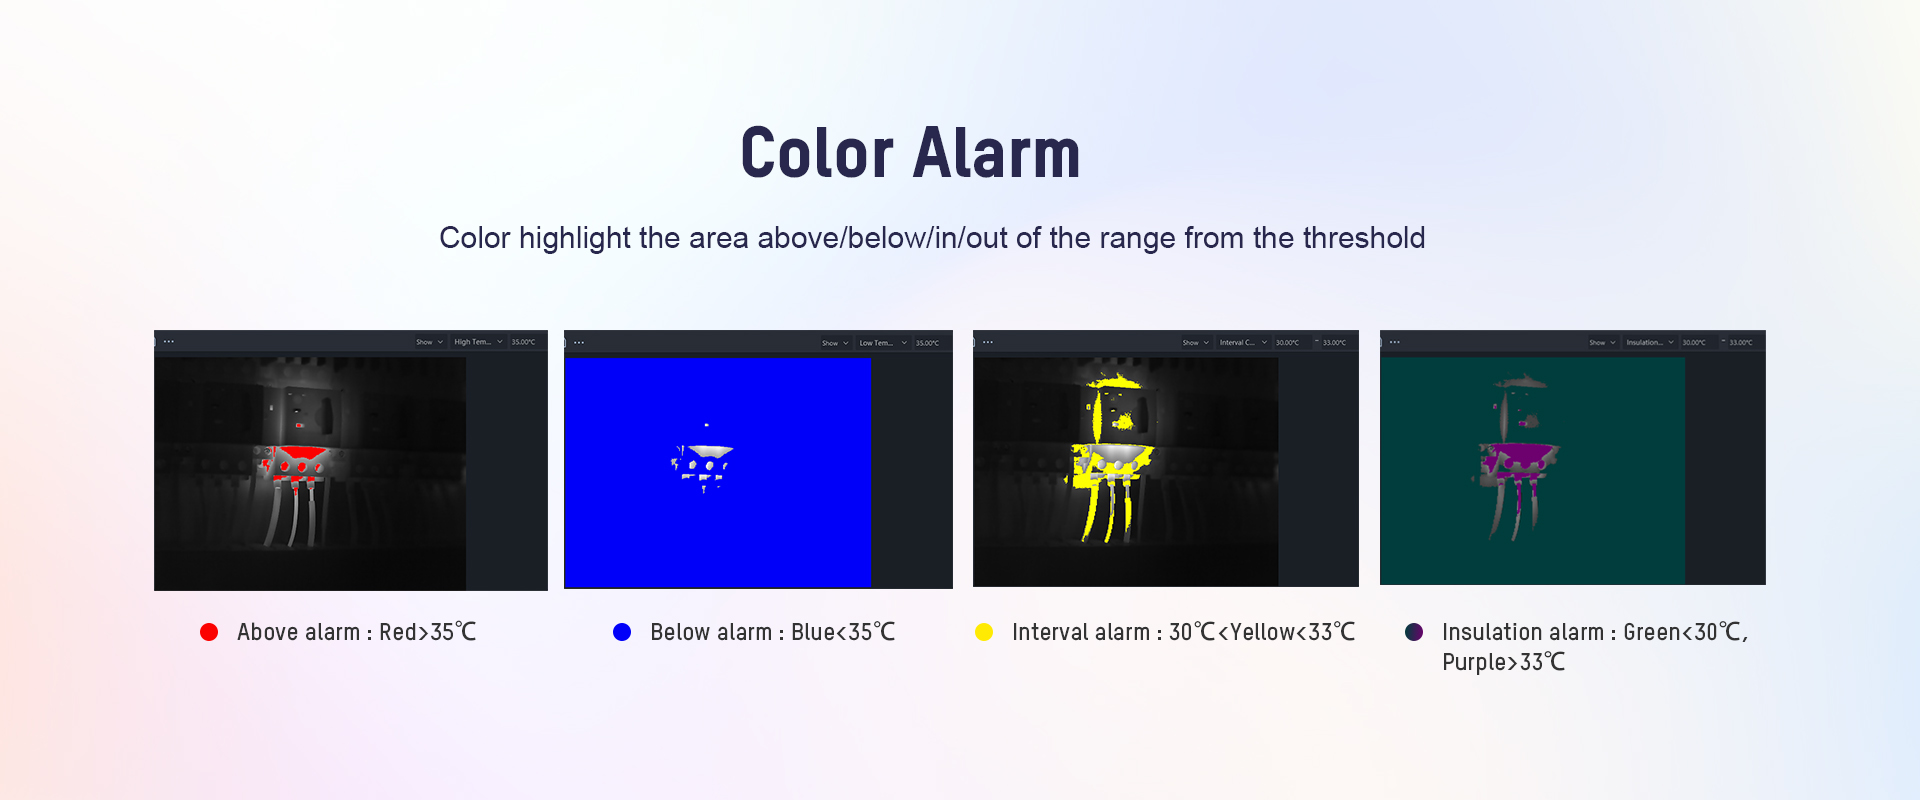 04-Color Alarm-M series.jpg